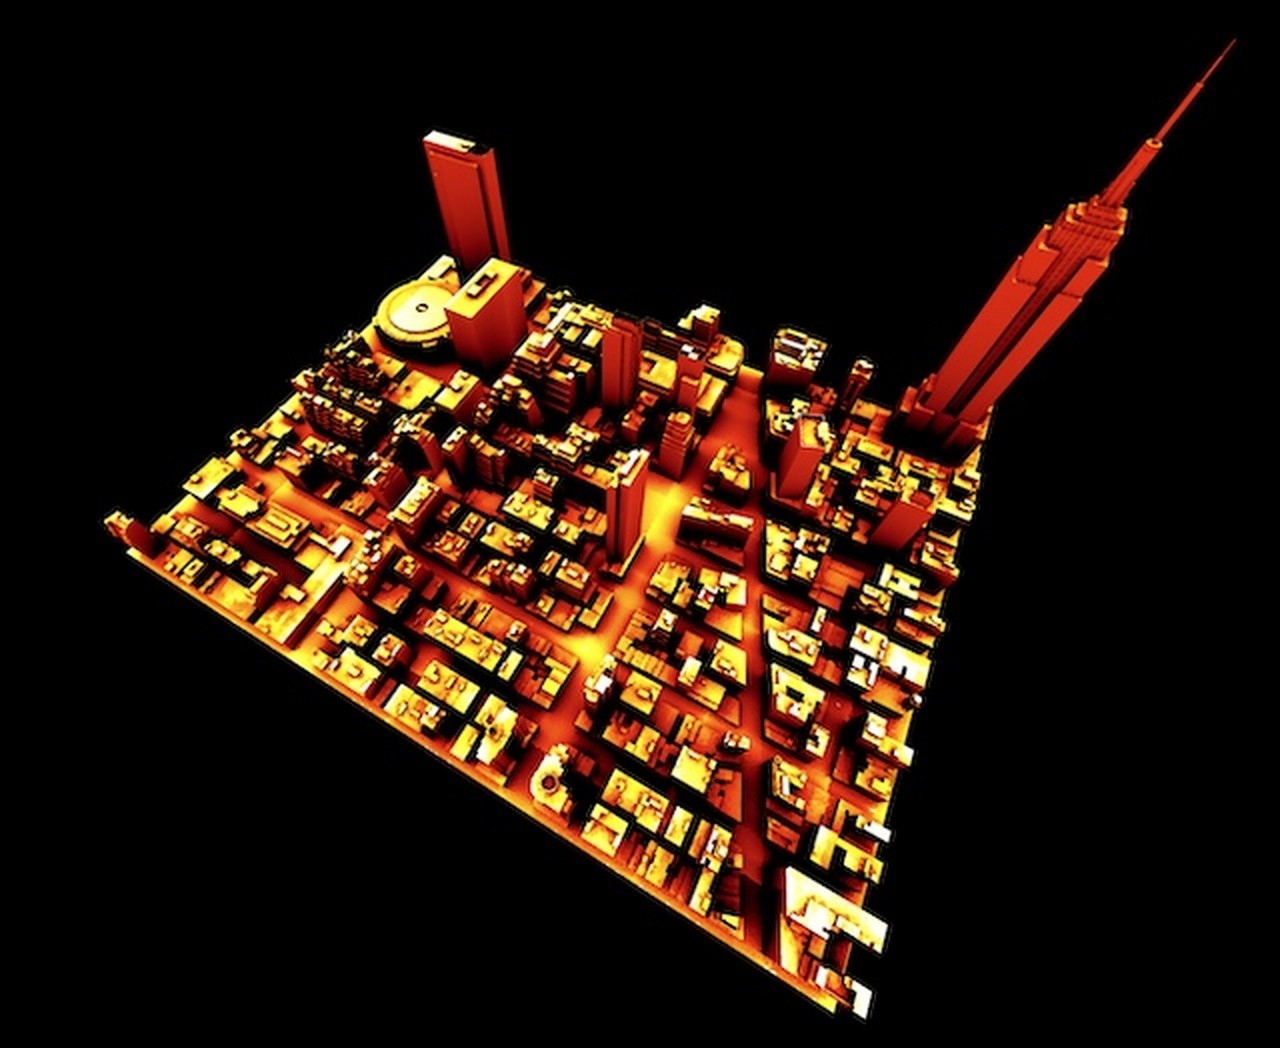 3D heat exchange simulation map of 3x8 building blocks